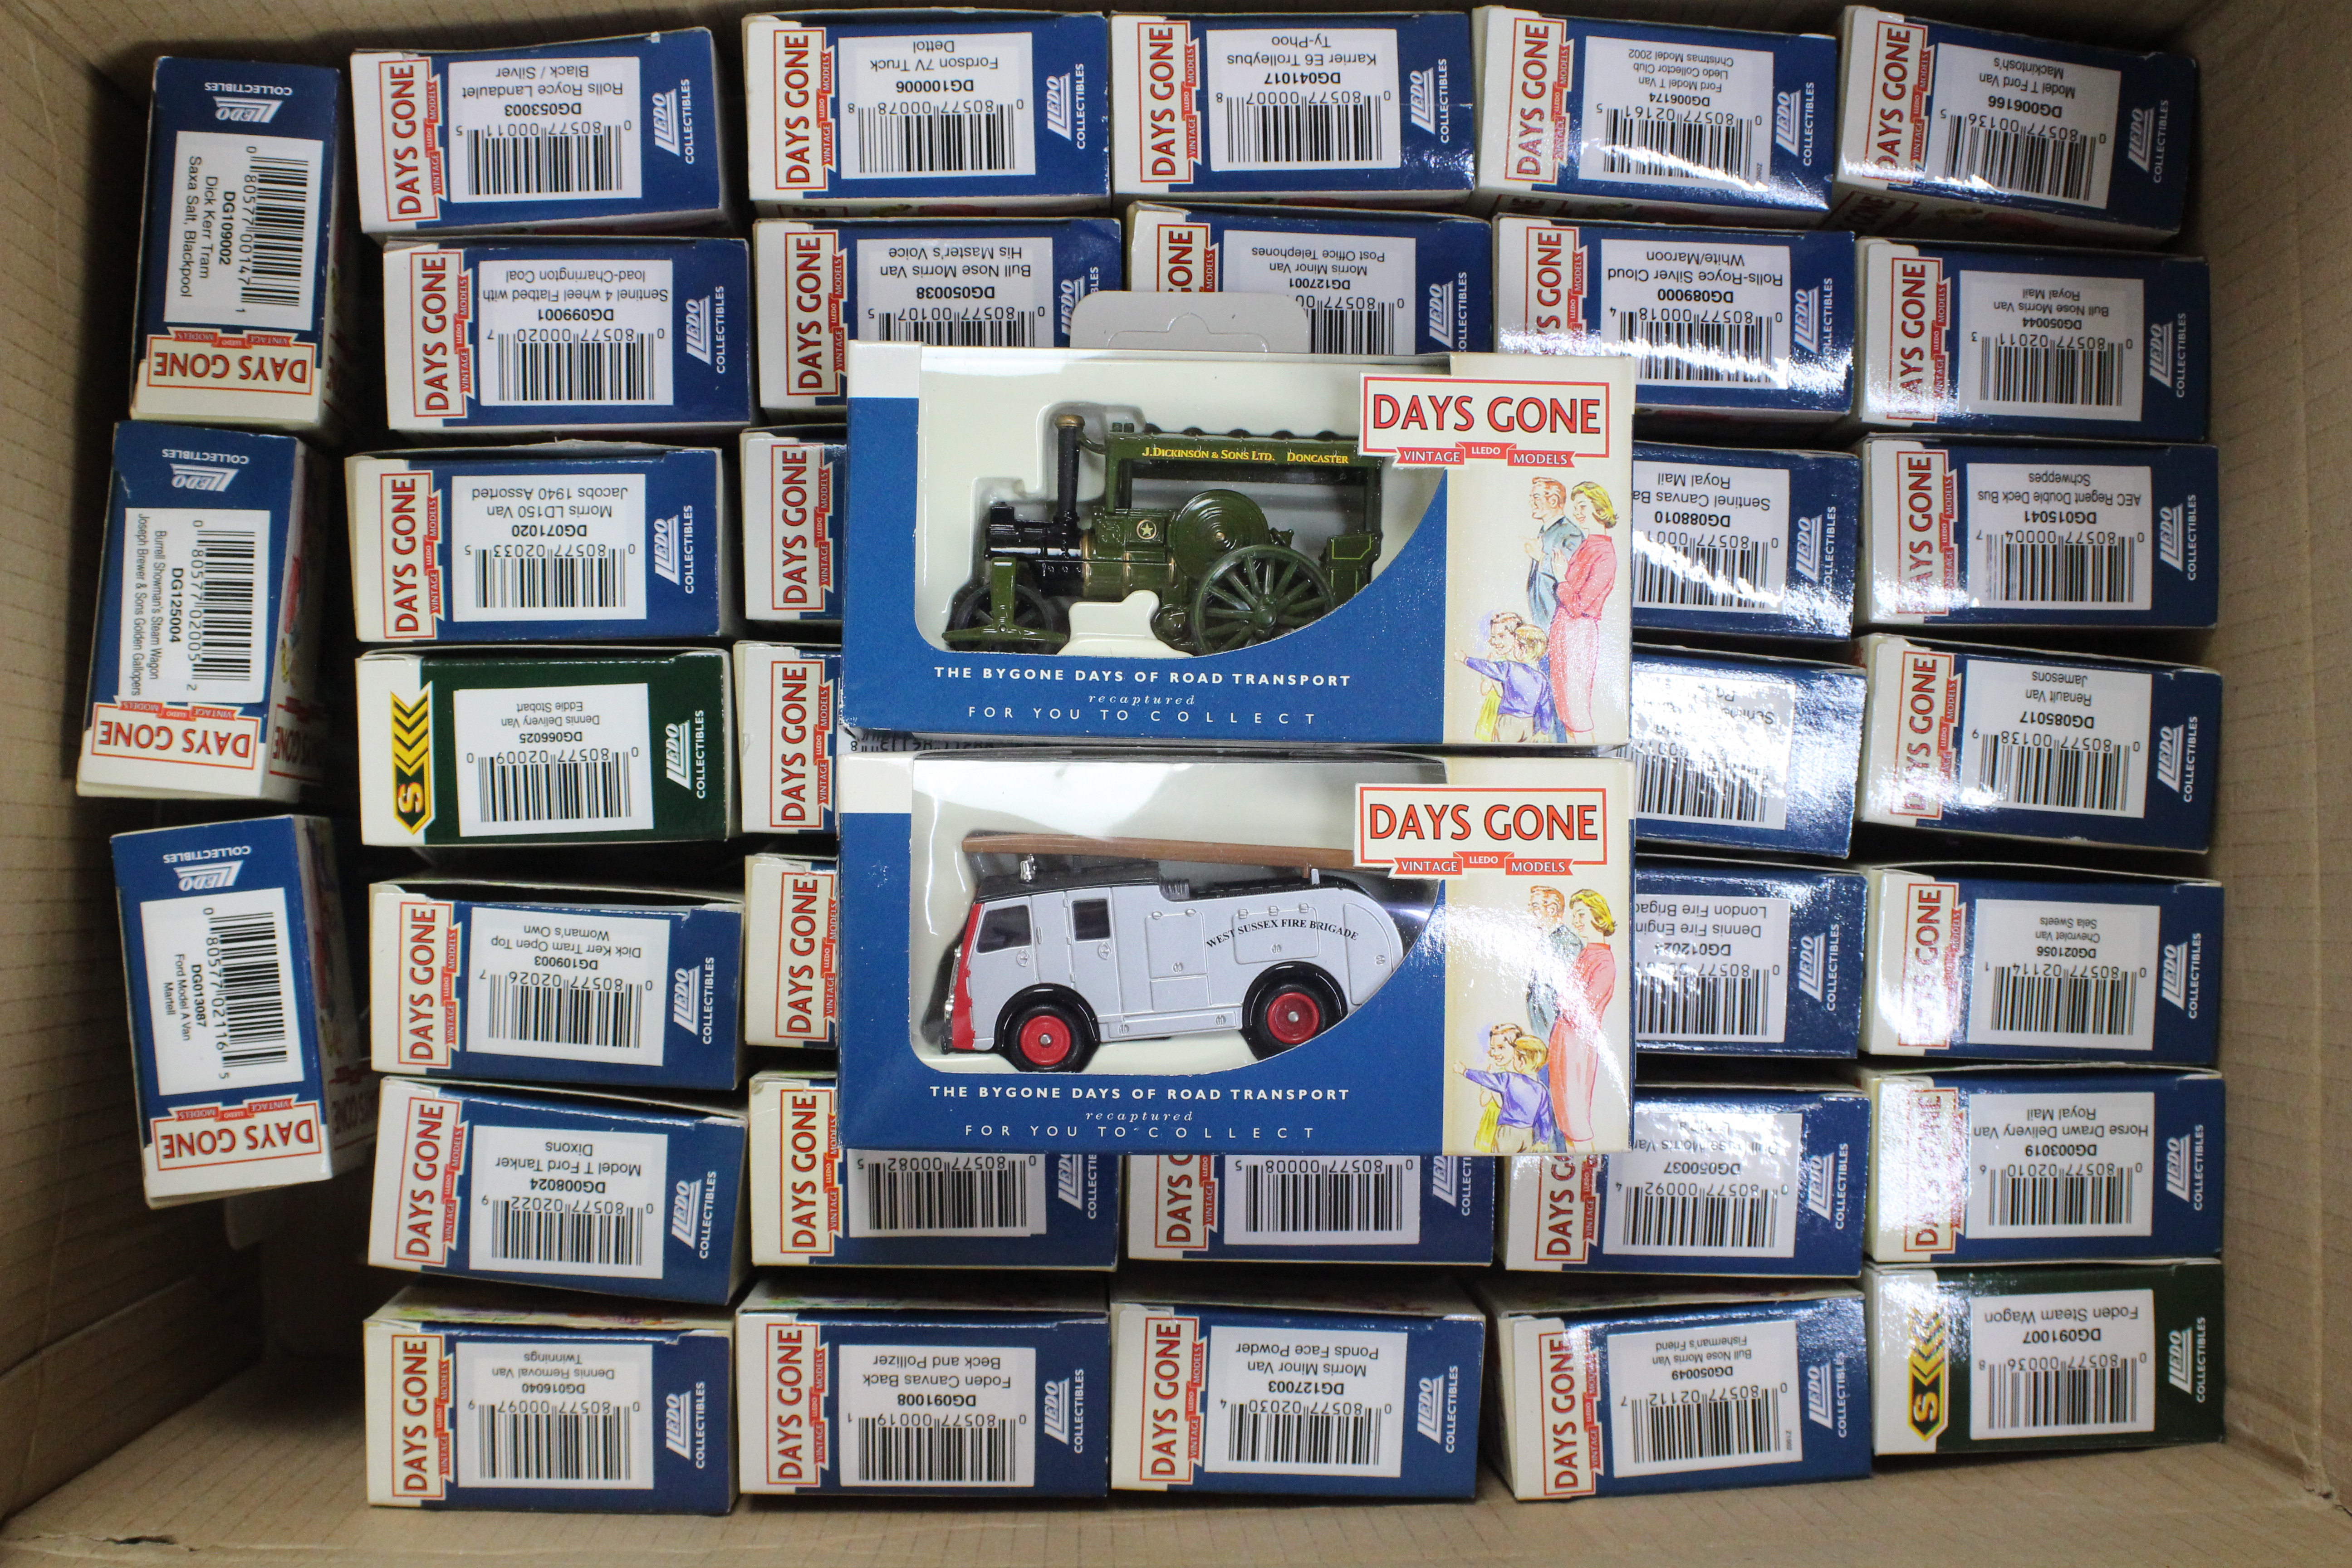 Lledo - 40 x boxed models including Roll Royce Silver Cloud # DG089000,